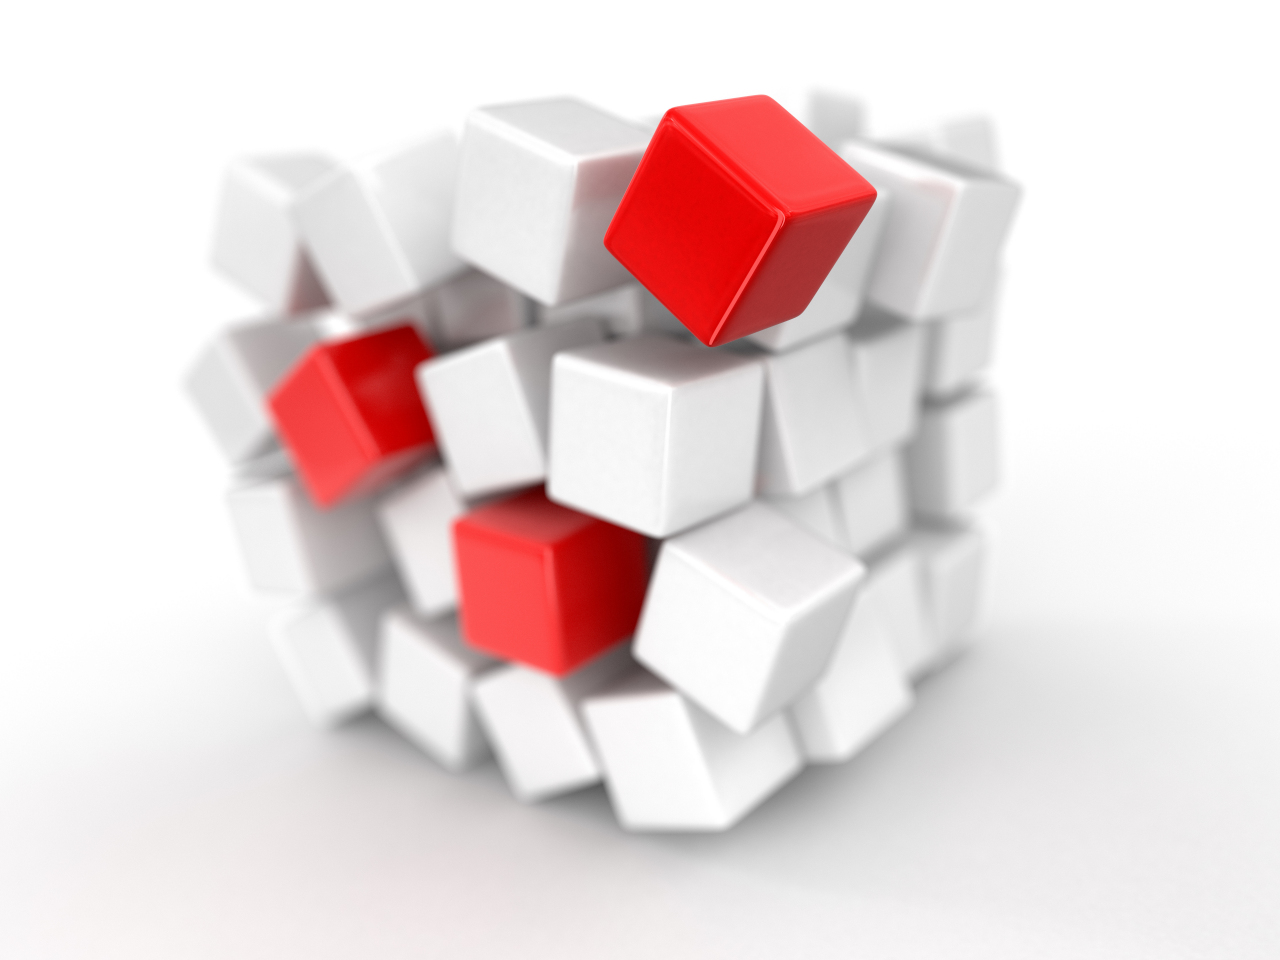 Cube breaking apart